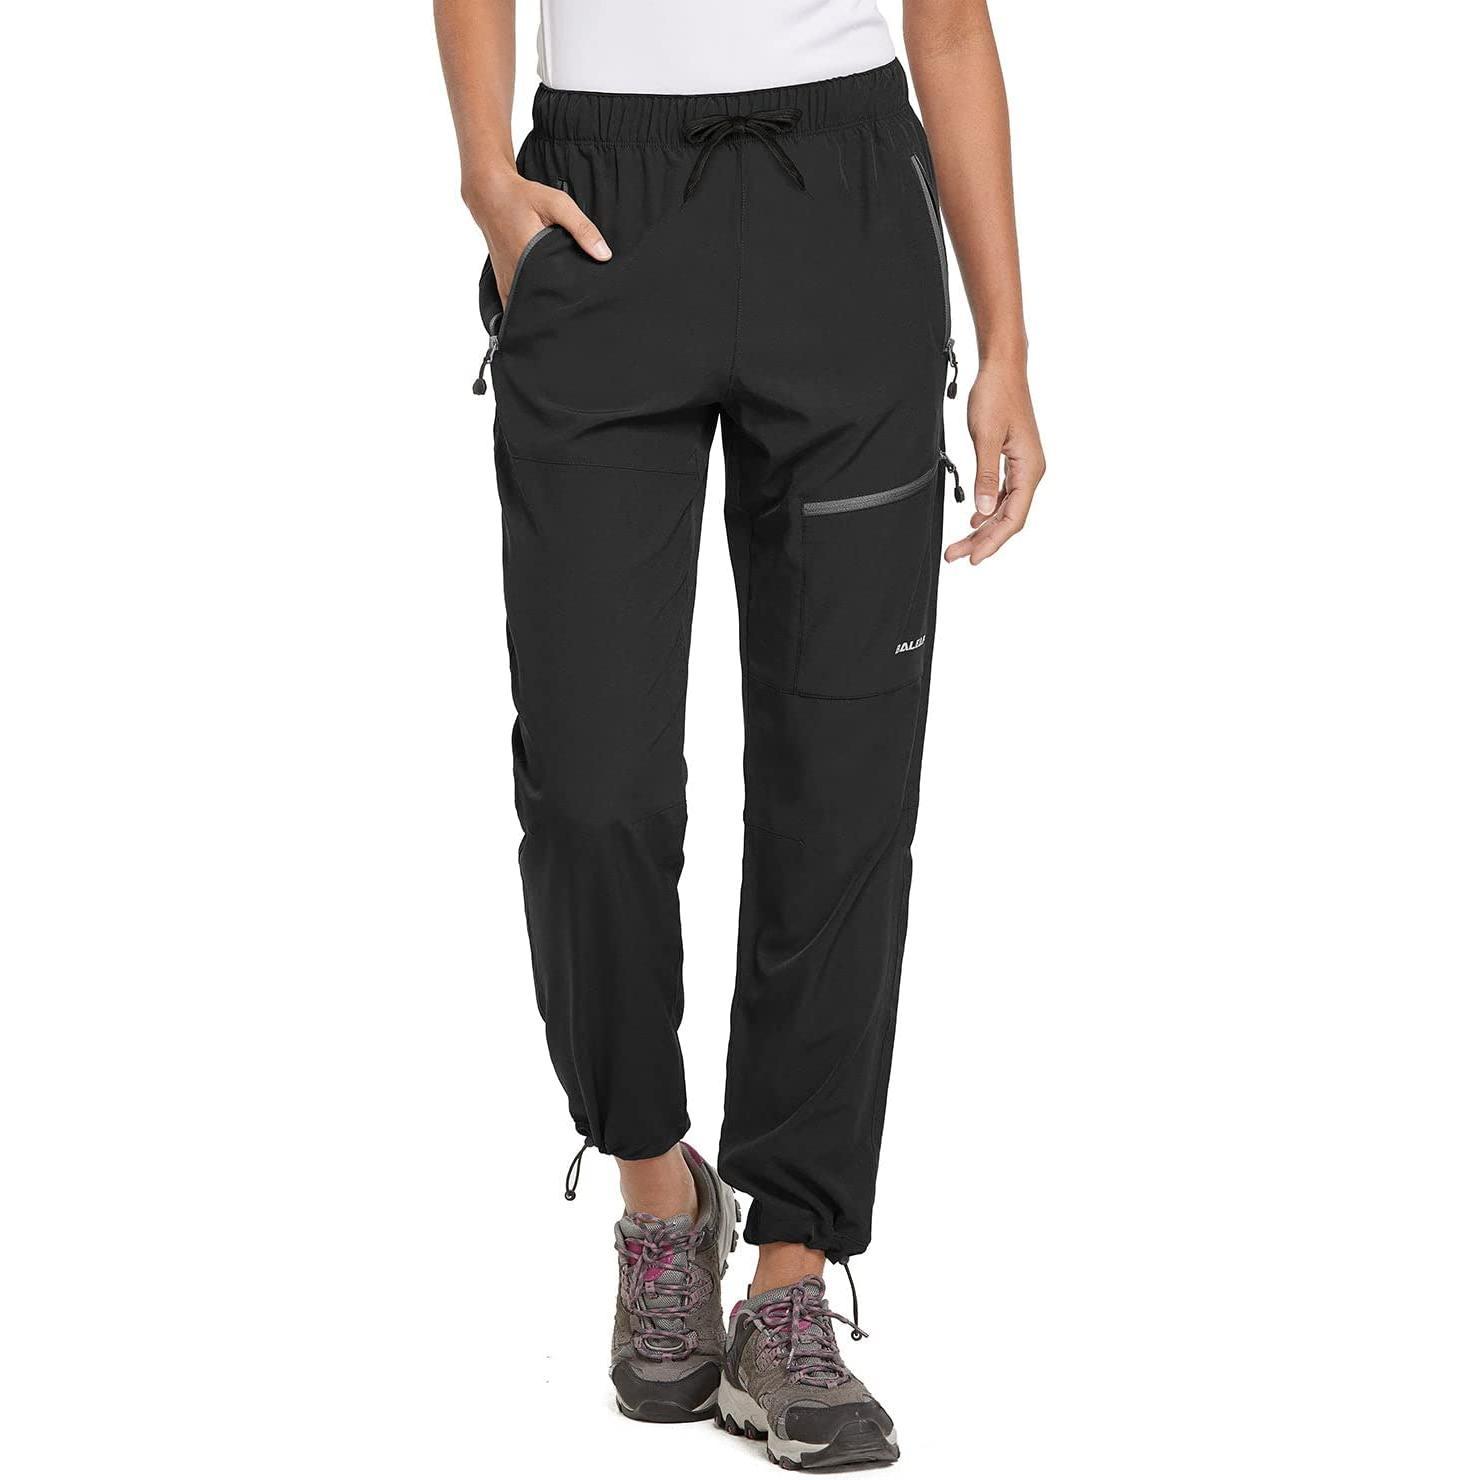 Women's Hiking Cargo Pants Outdoor Lightweight Capris Water Resistant UPF 50 Zipper Pockets